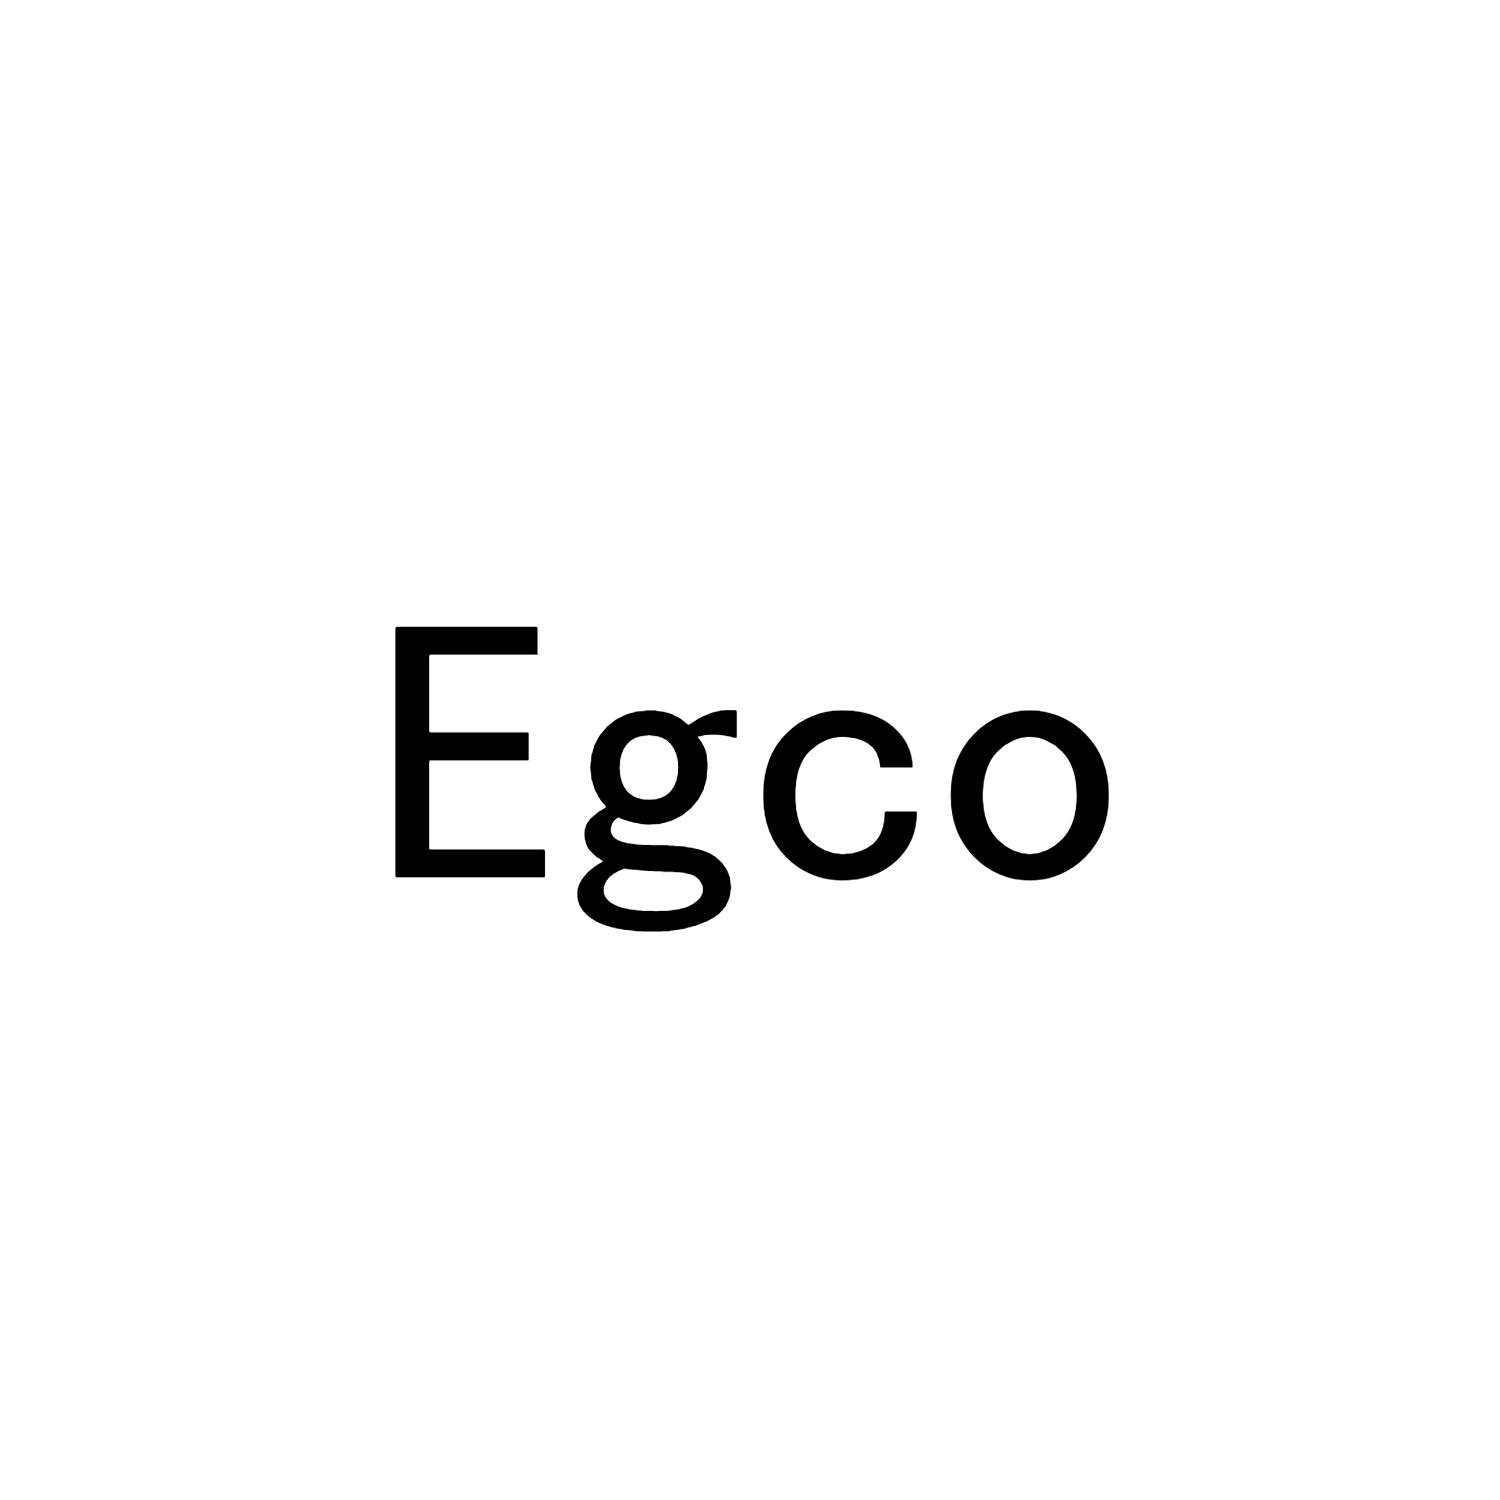 EGCO